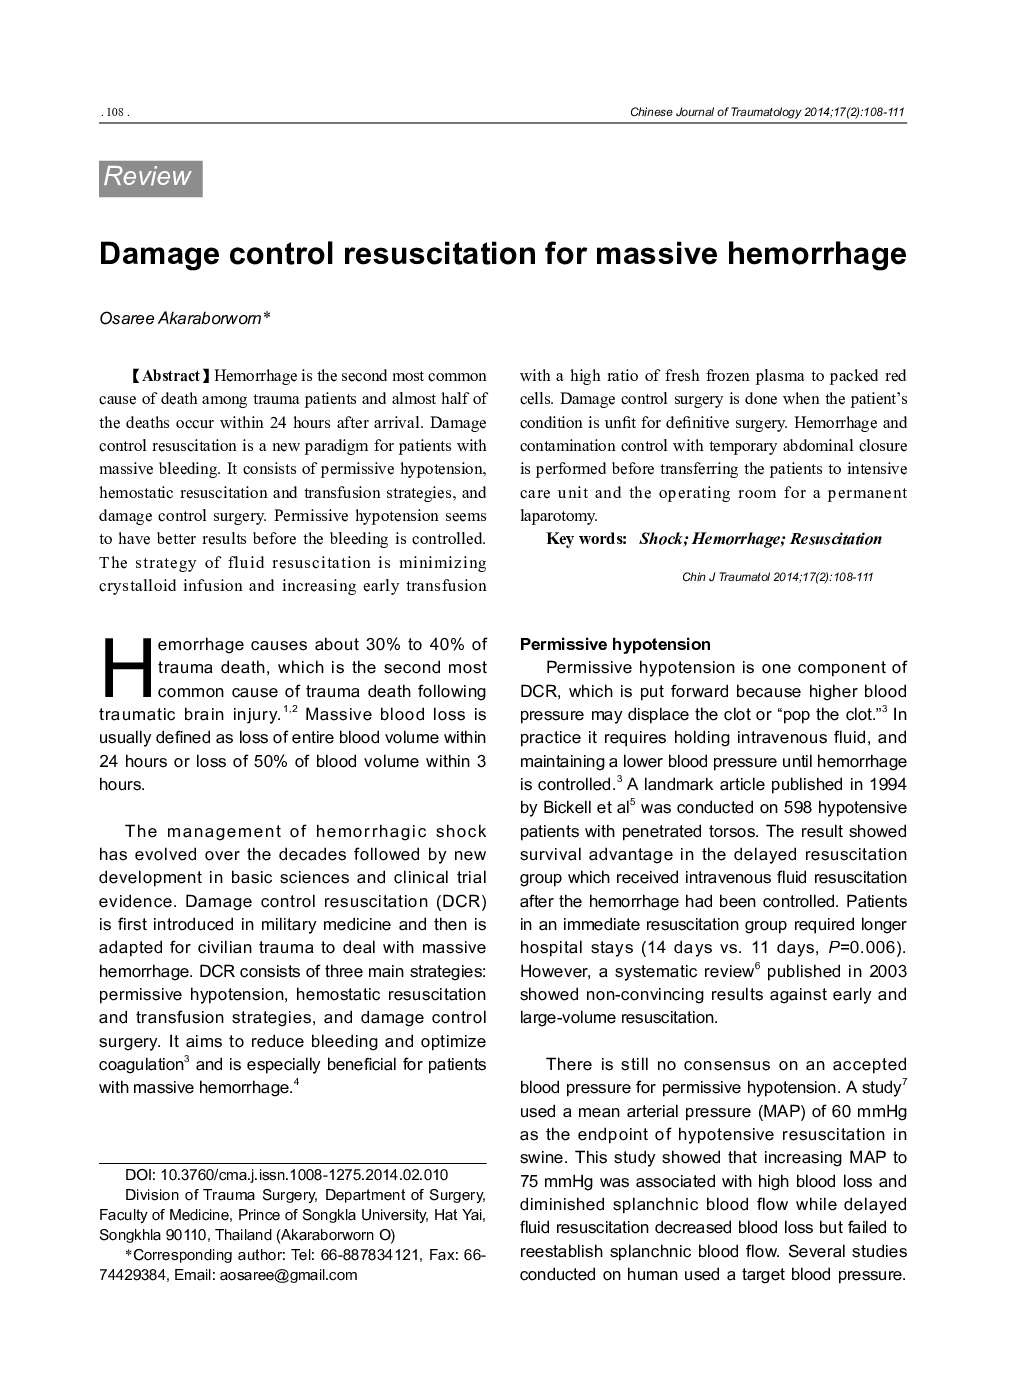 Damage control resuscitation for massive hemorrhage